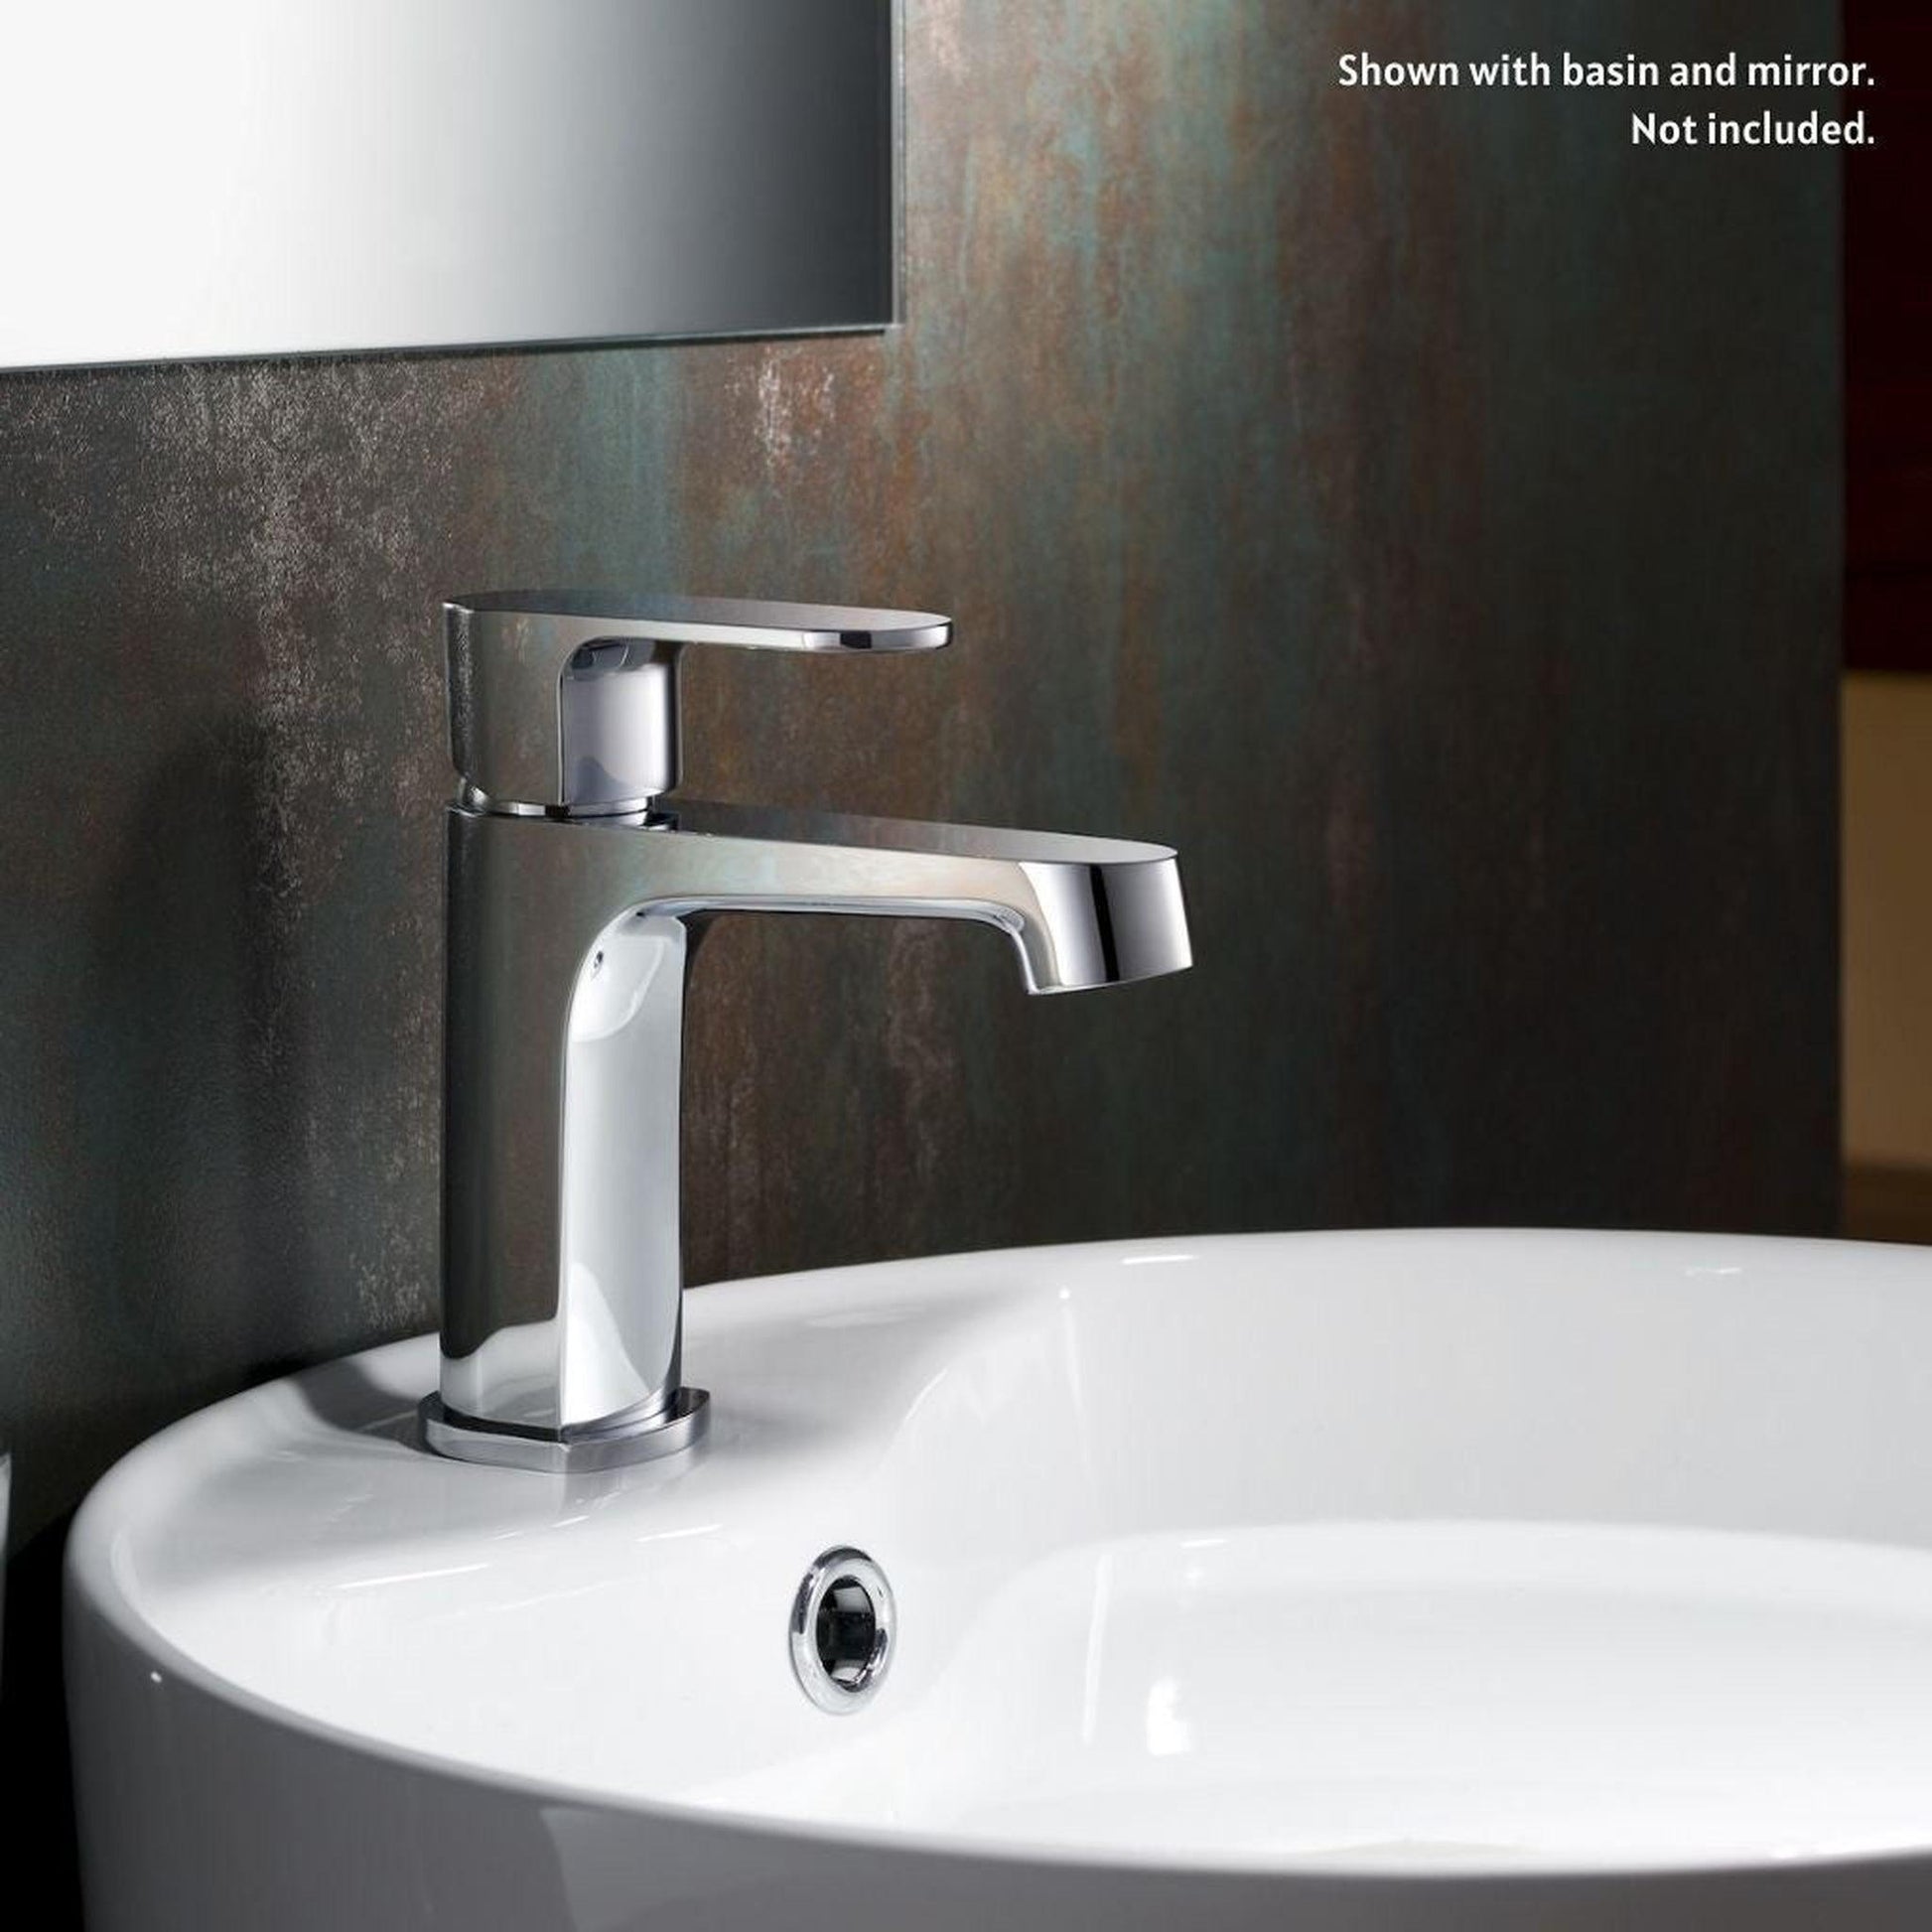 Blossom Diamond Series Sancy 5" x 6" Chrome Lever Handle Bathroom Sink Single Hole Faucet